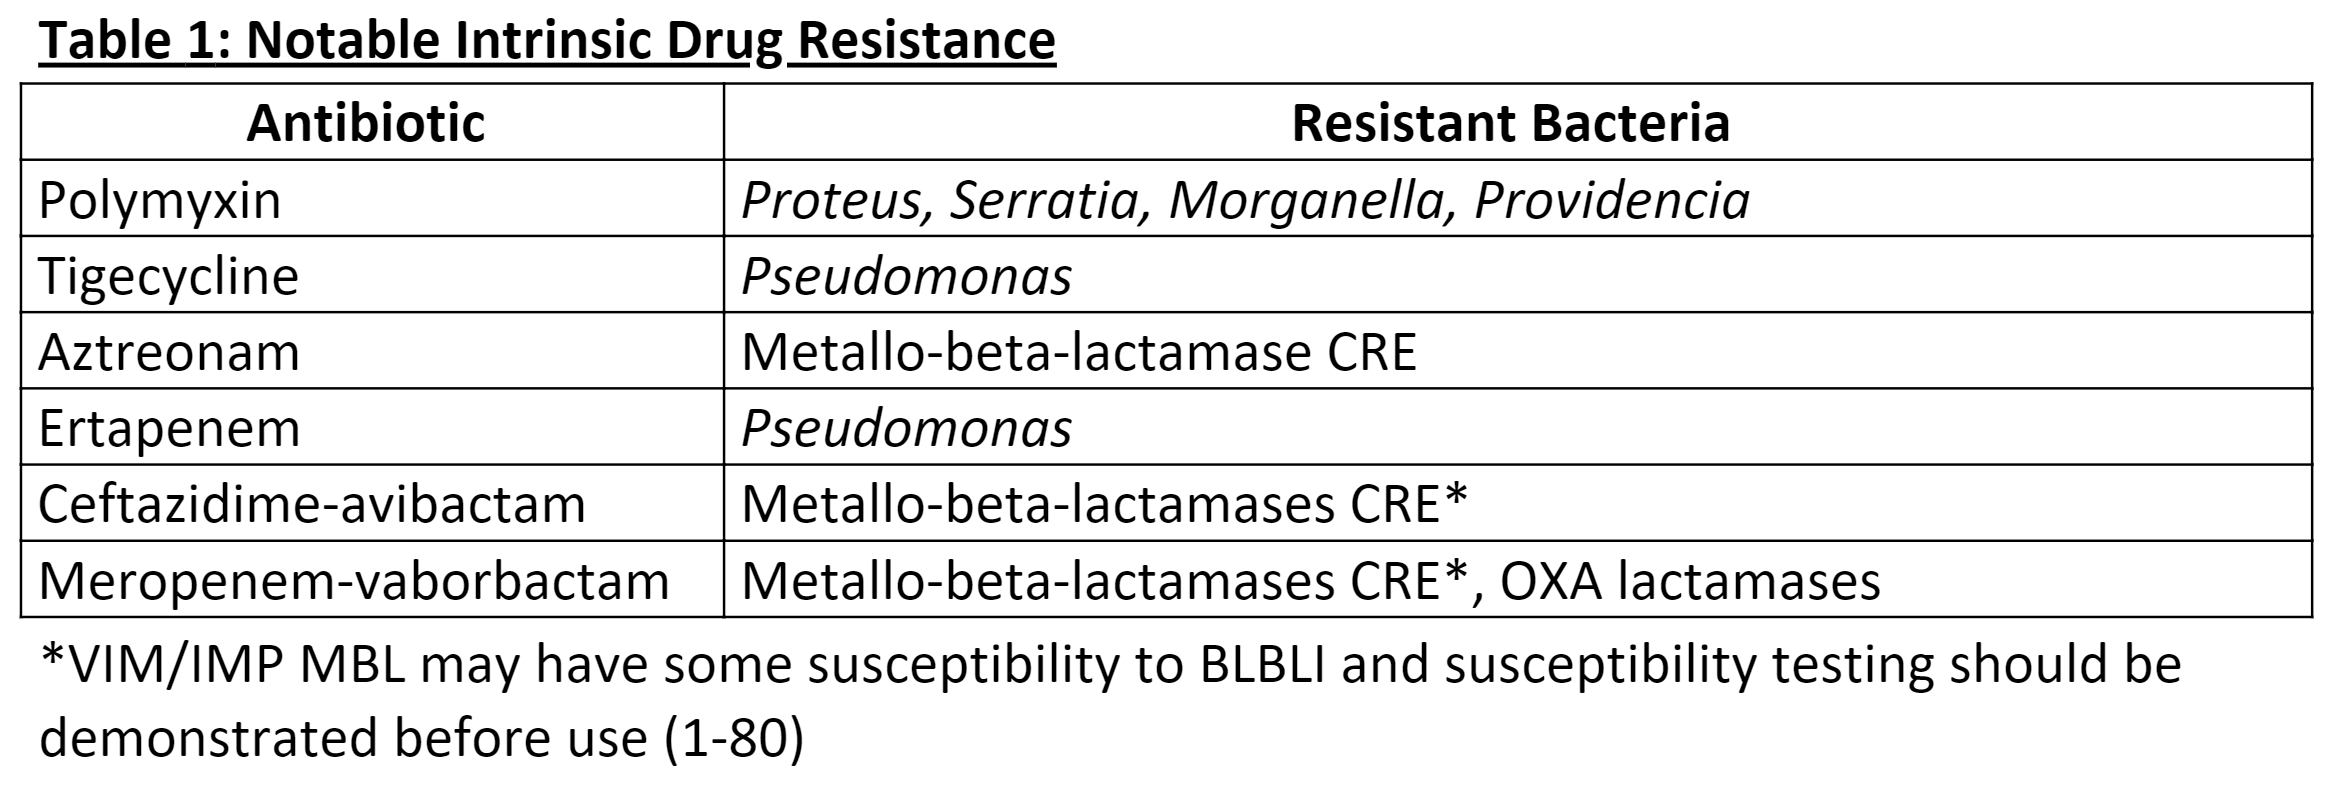 Notable Intrinsic Drug Resistance